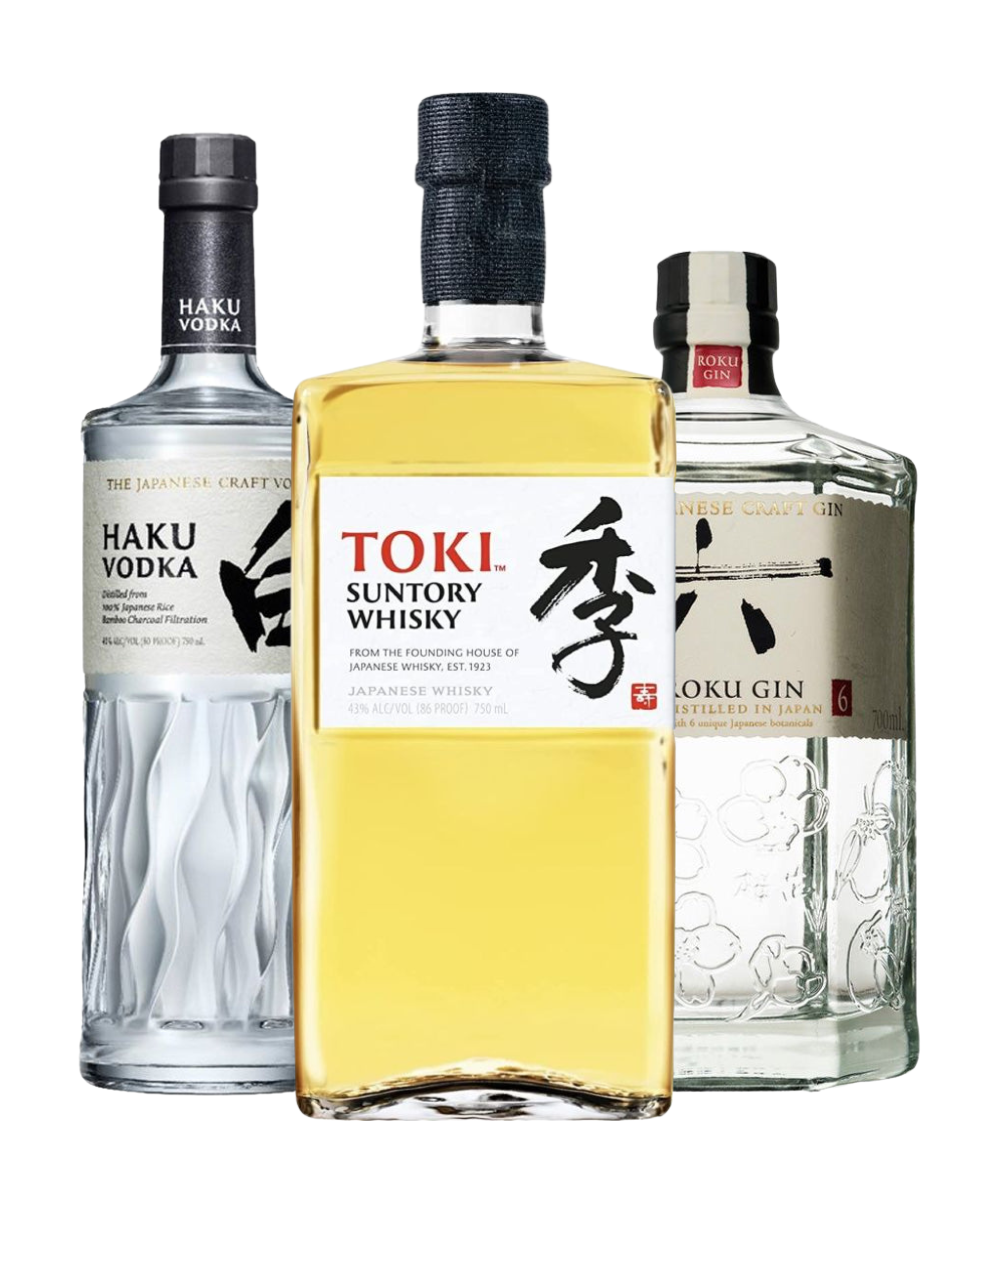 Suntory Whisky Toki with | ReserveBar Haku Vodka and Roku Gin